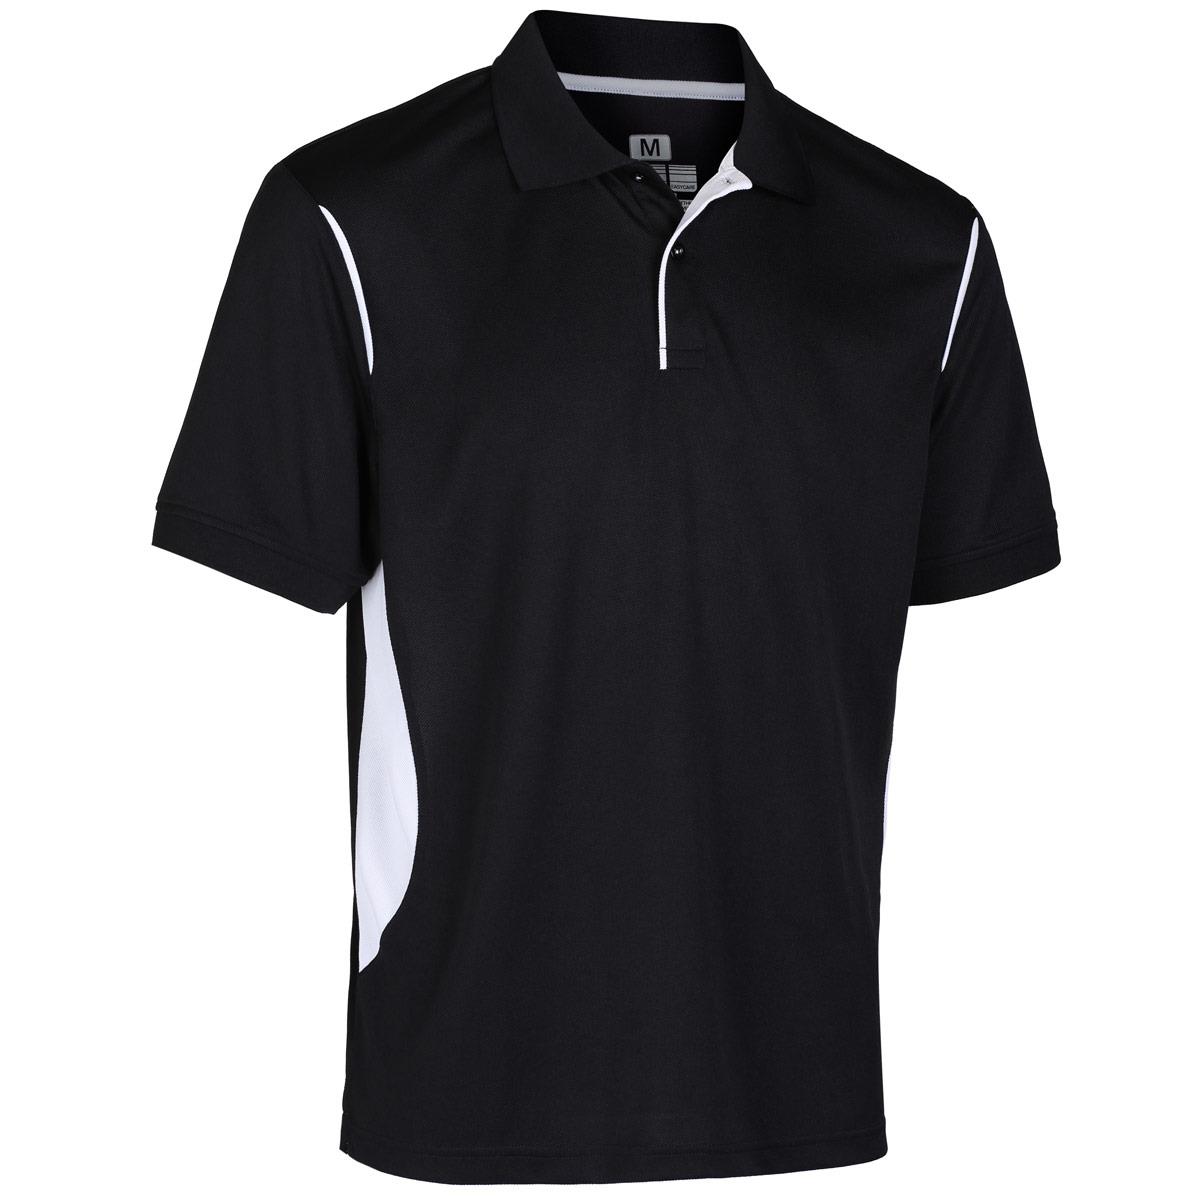 Kids Black and White Teamwear Premium Polo Shirt | rugbystore